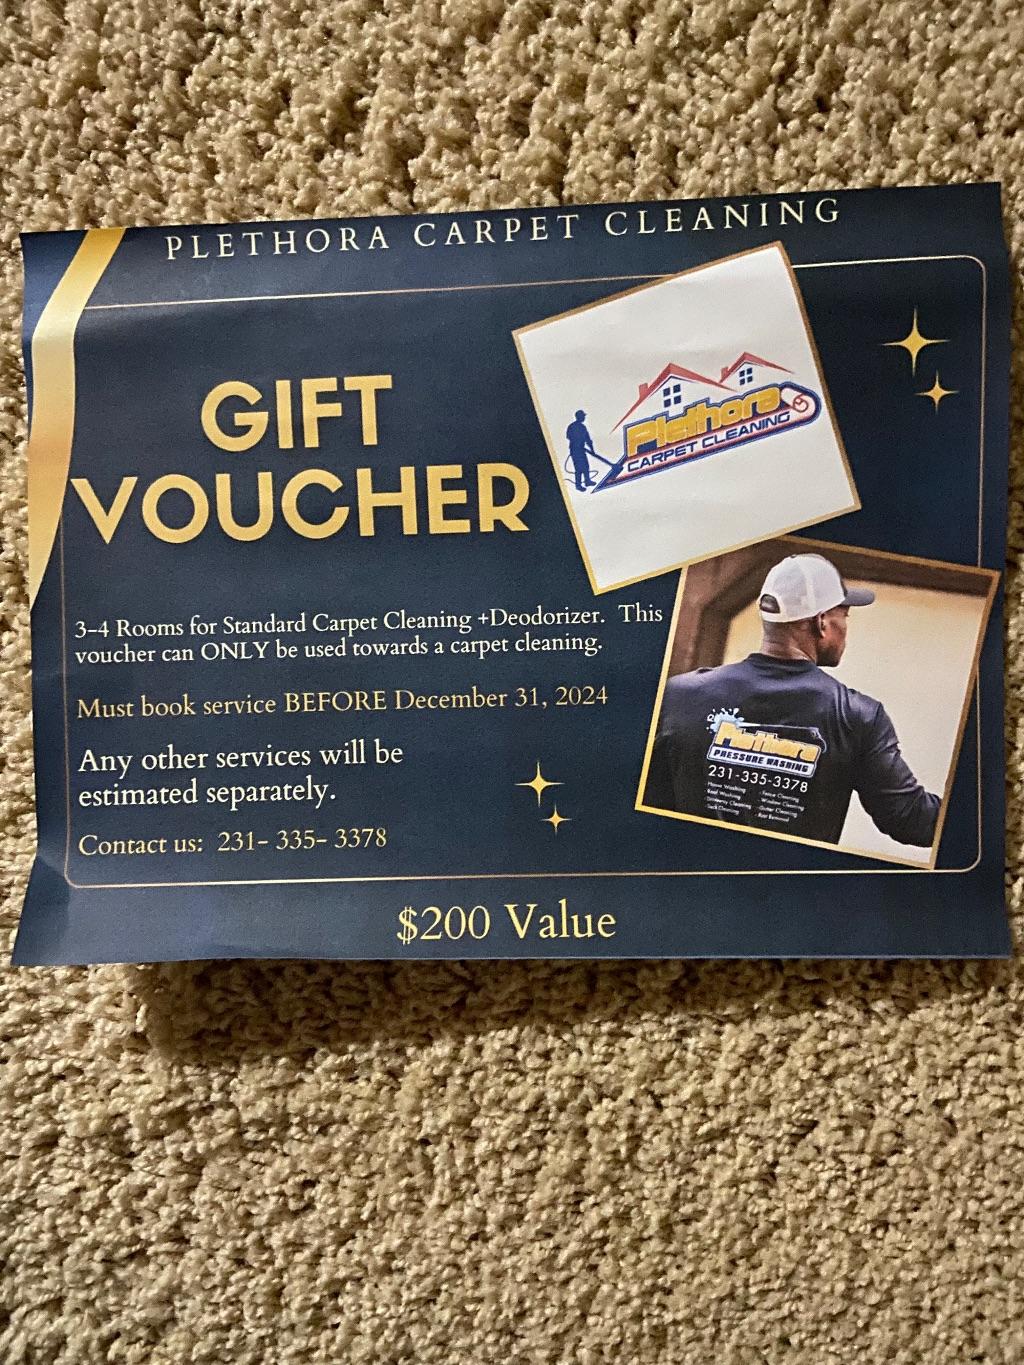 Plethora Carpet Cleaning $200 Gift Voucher